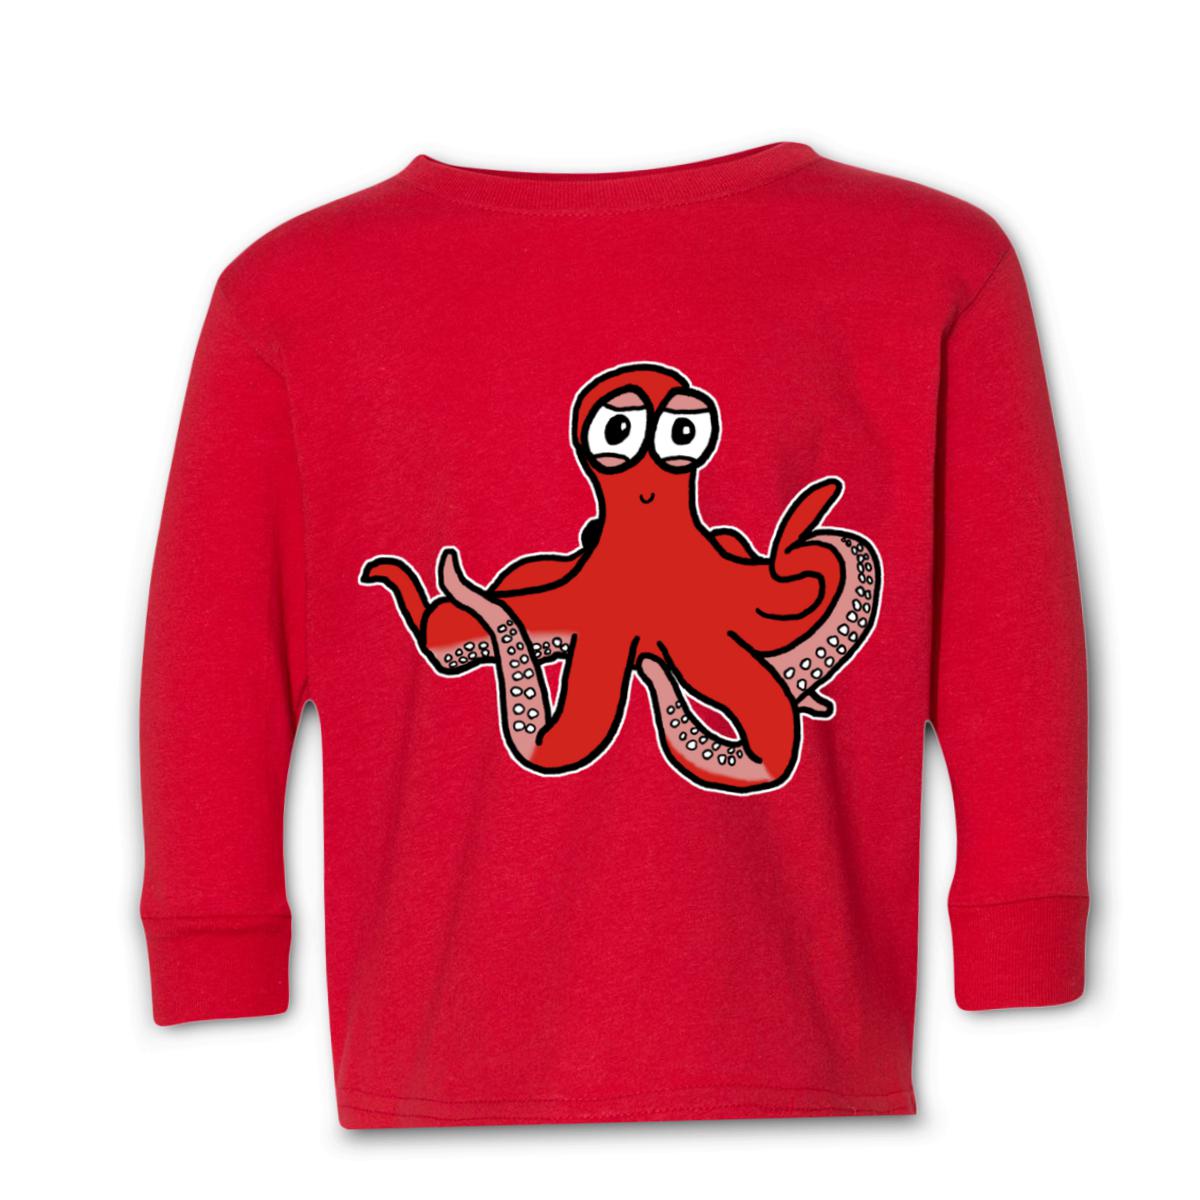 Octopus Kid's Long Sleeve Tee Large red